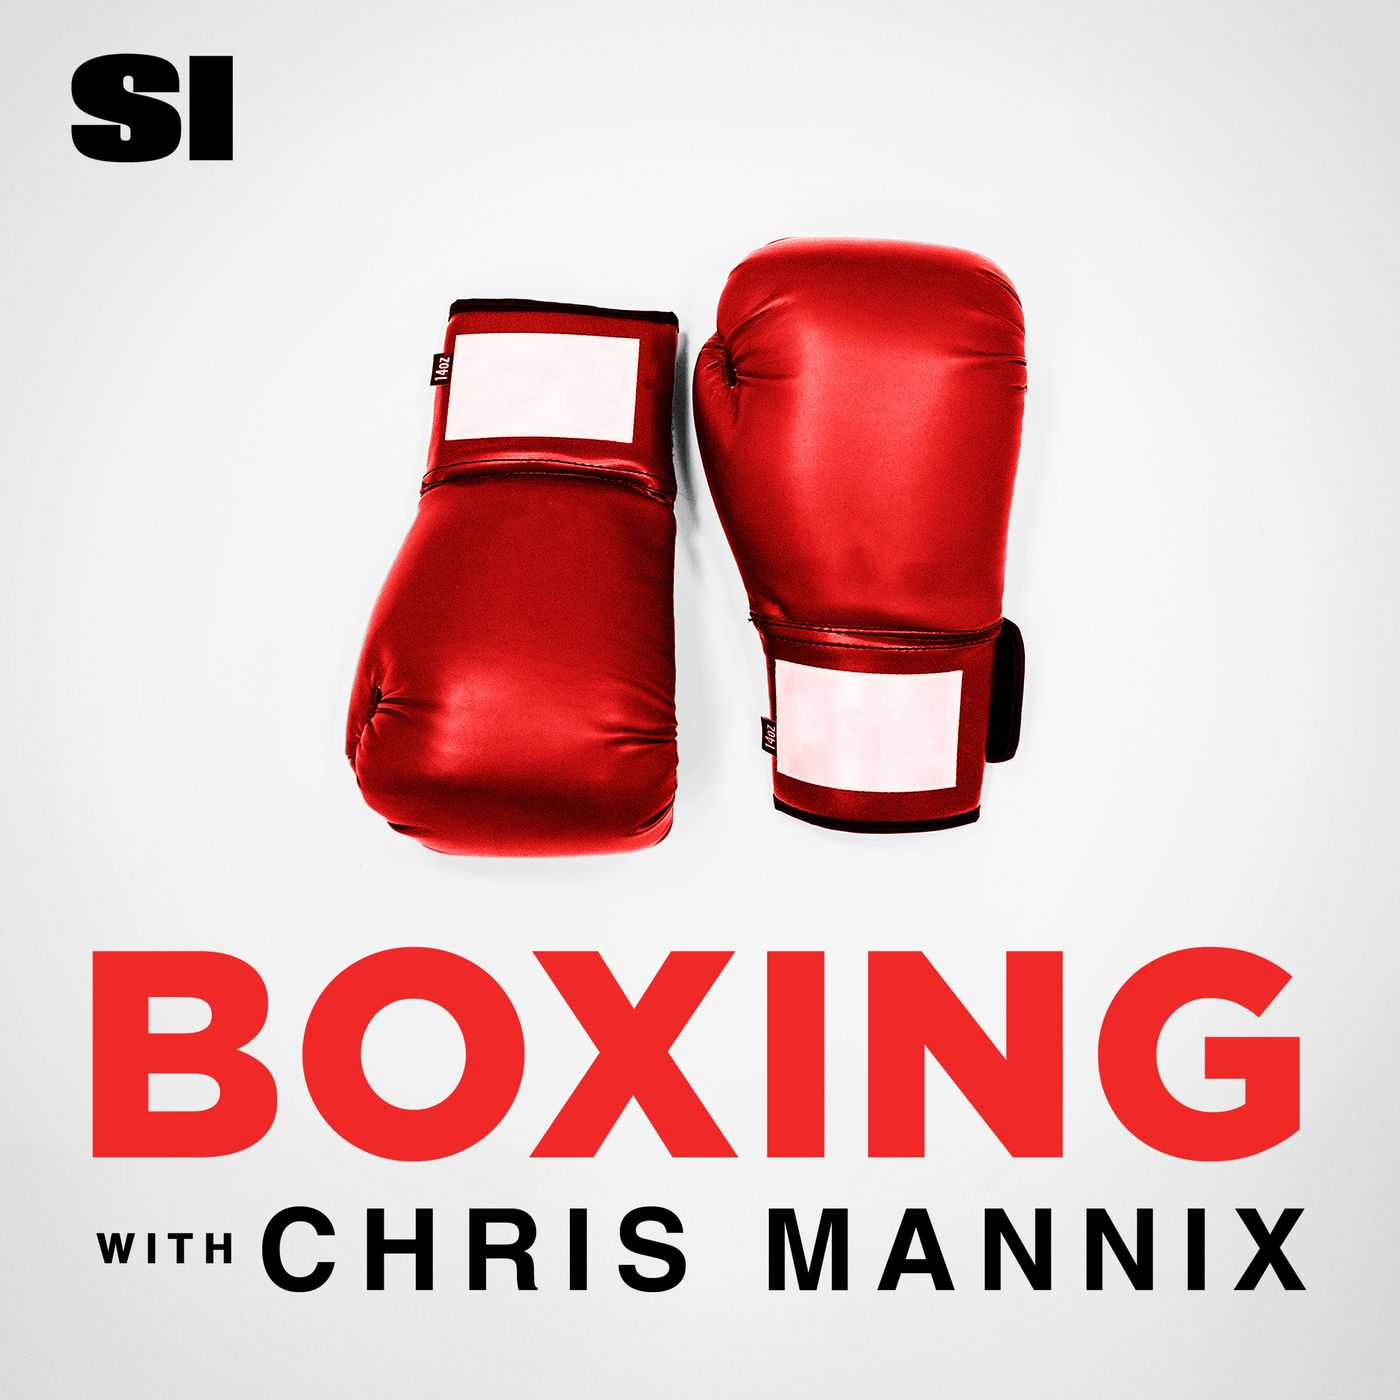 A highlight from Boxing with Chris Mannix - Tank Davis vs. Ryan Garcia, It's finally on